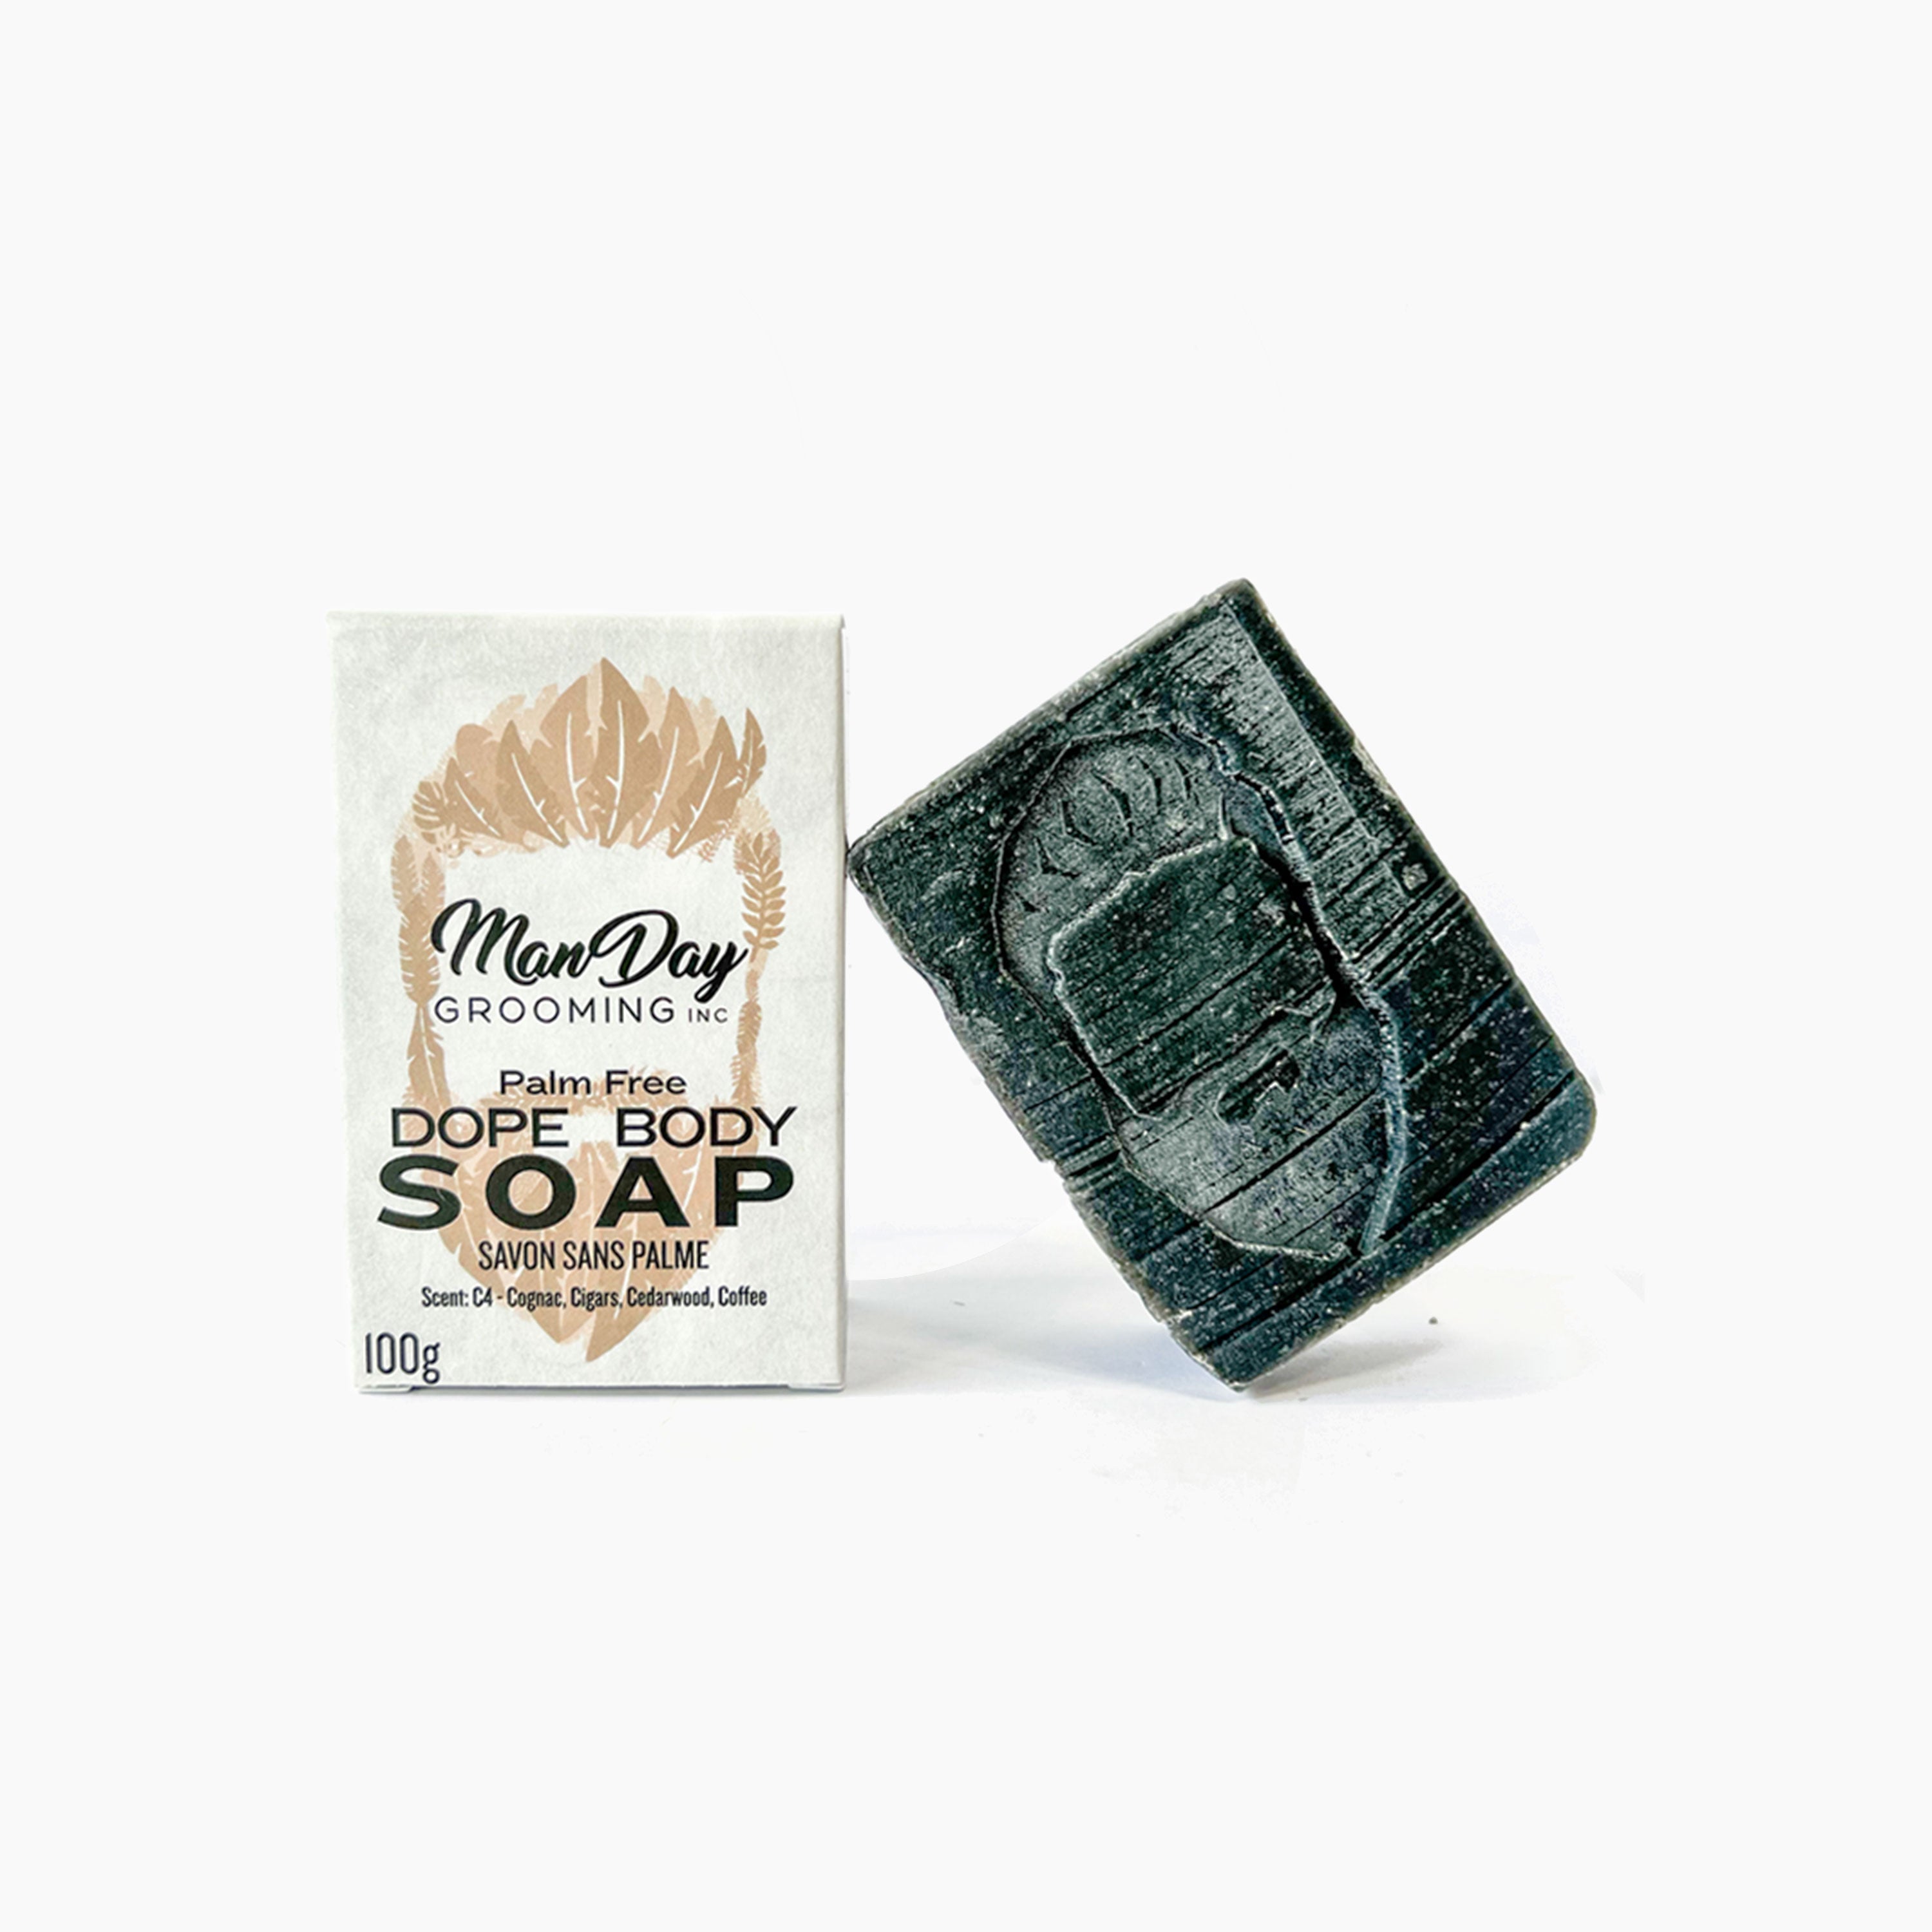 Manday Hemp Face & Body Soap